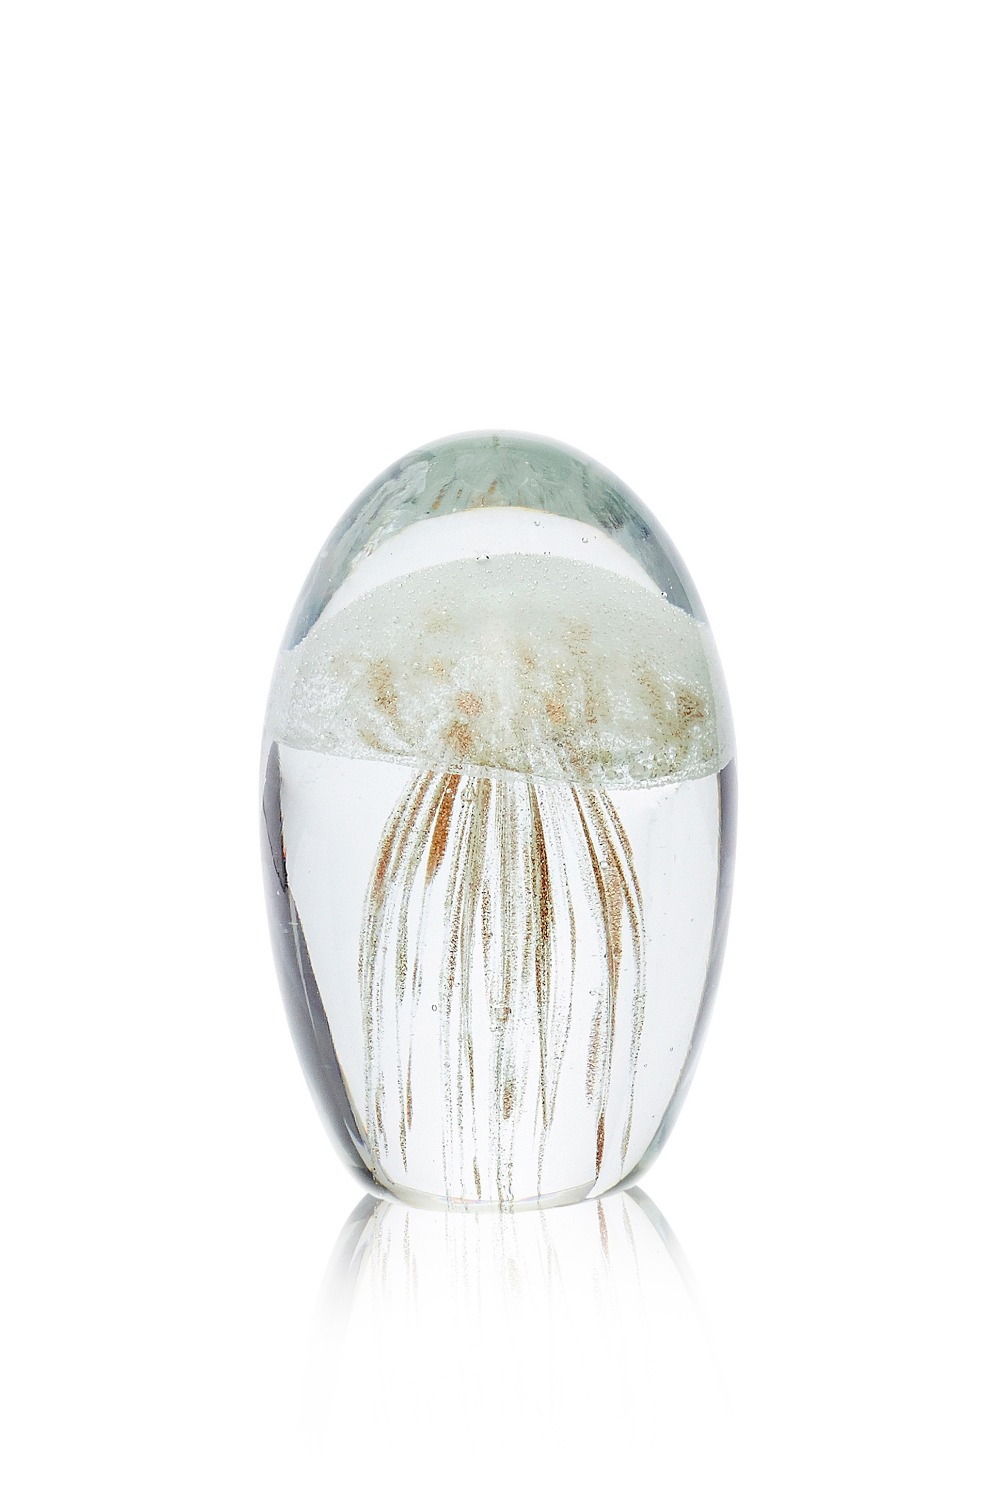 Paperweight Glass Jellyfish